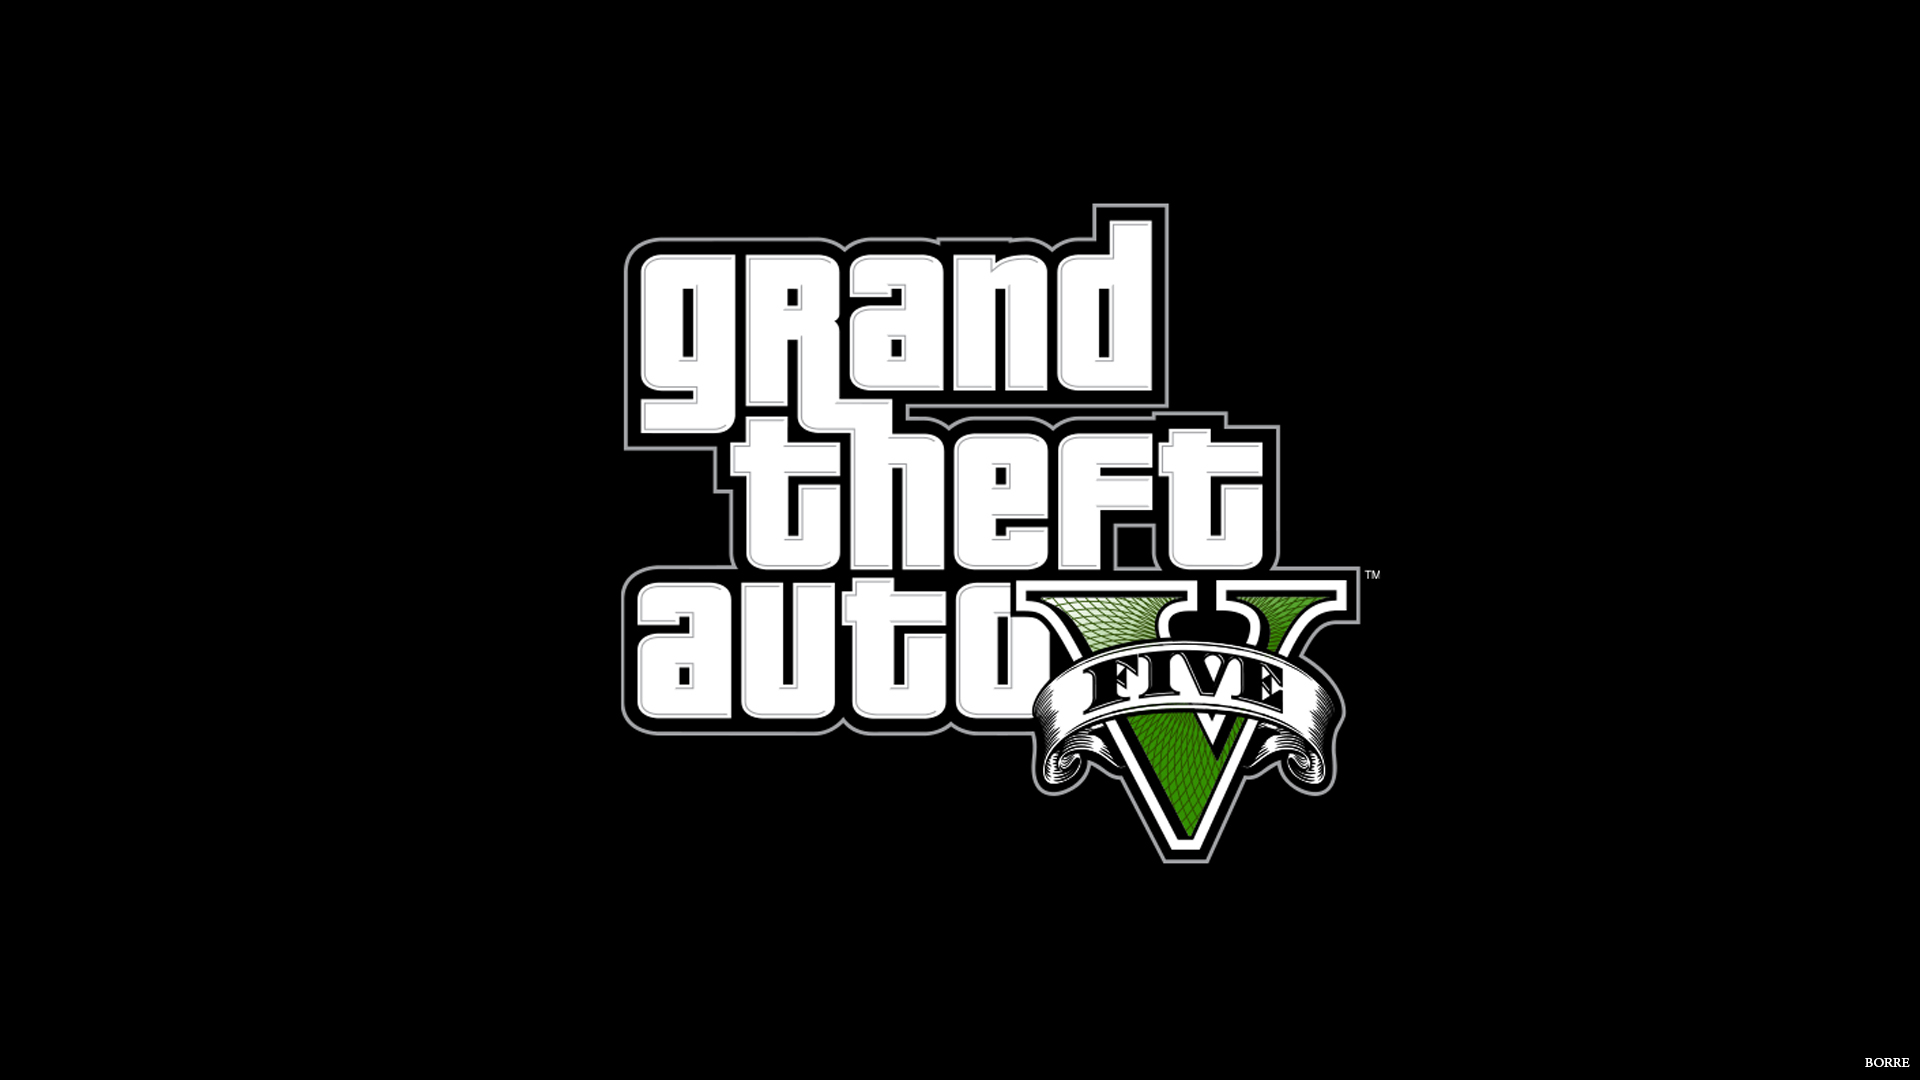 Grand Theft Auto V by Borre